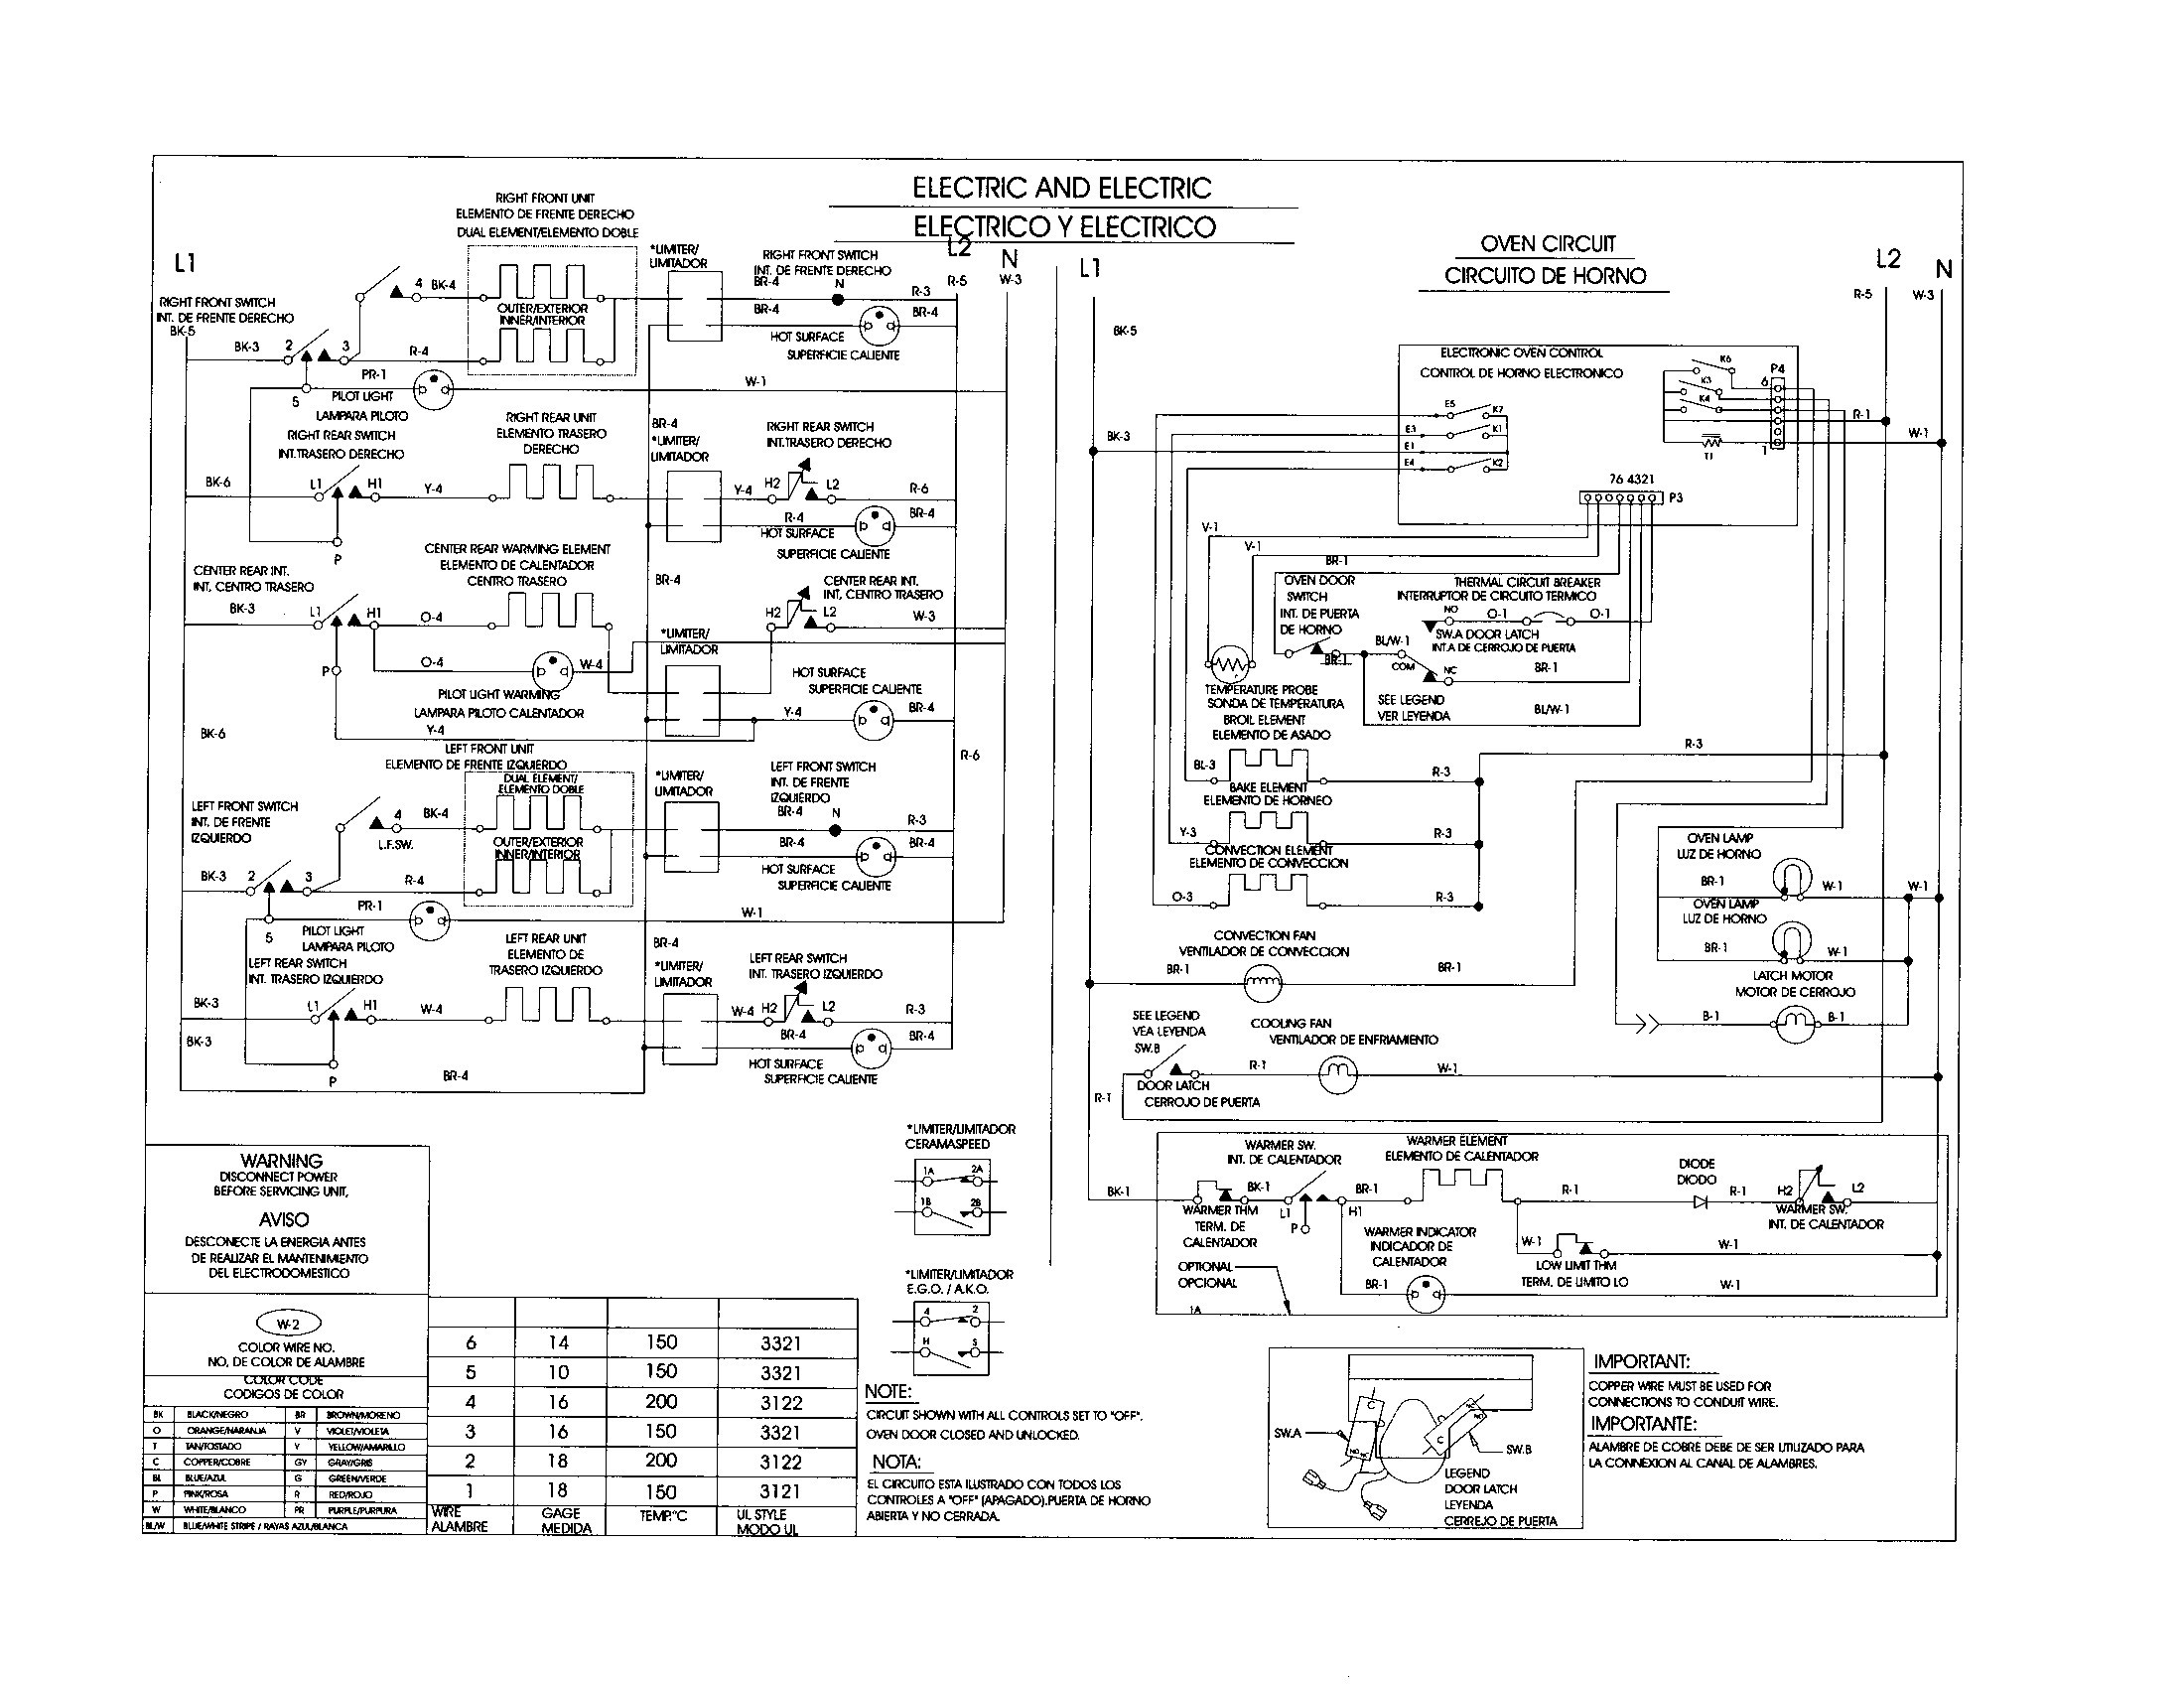 Wiring Diagram for Kenmore Elite Refrigerator Copy Electrical at Kenmore Elite Wiring Diagram Sample